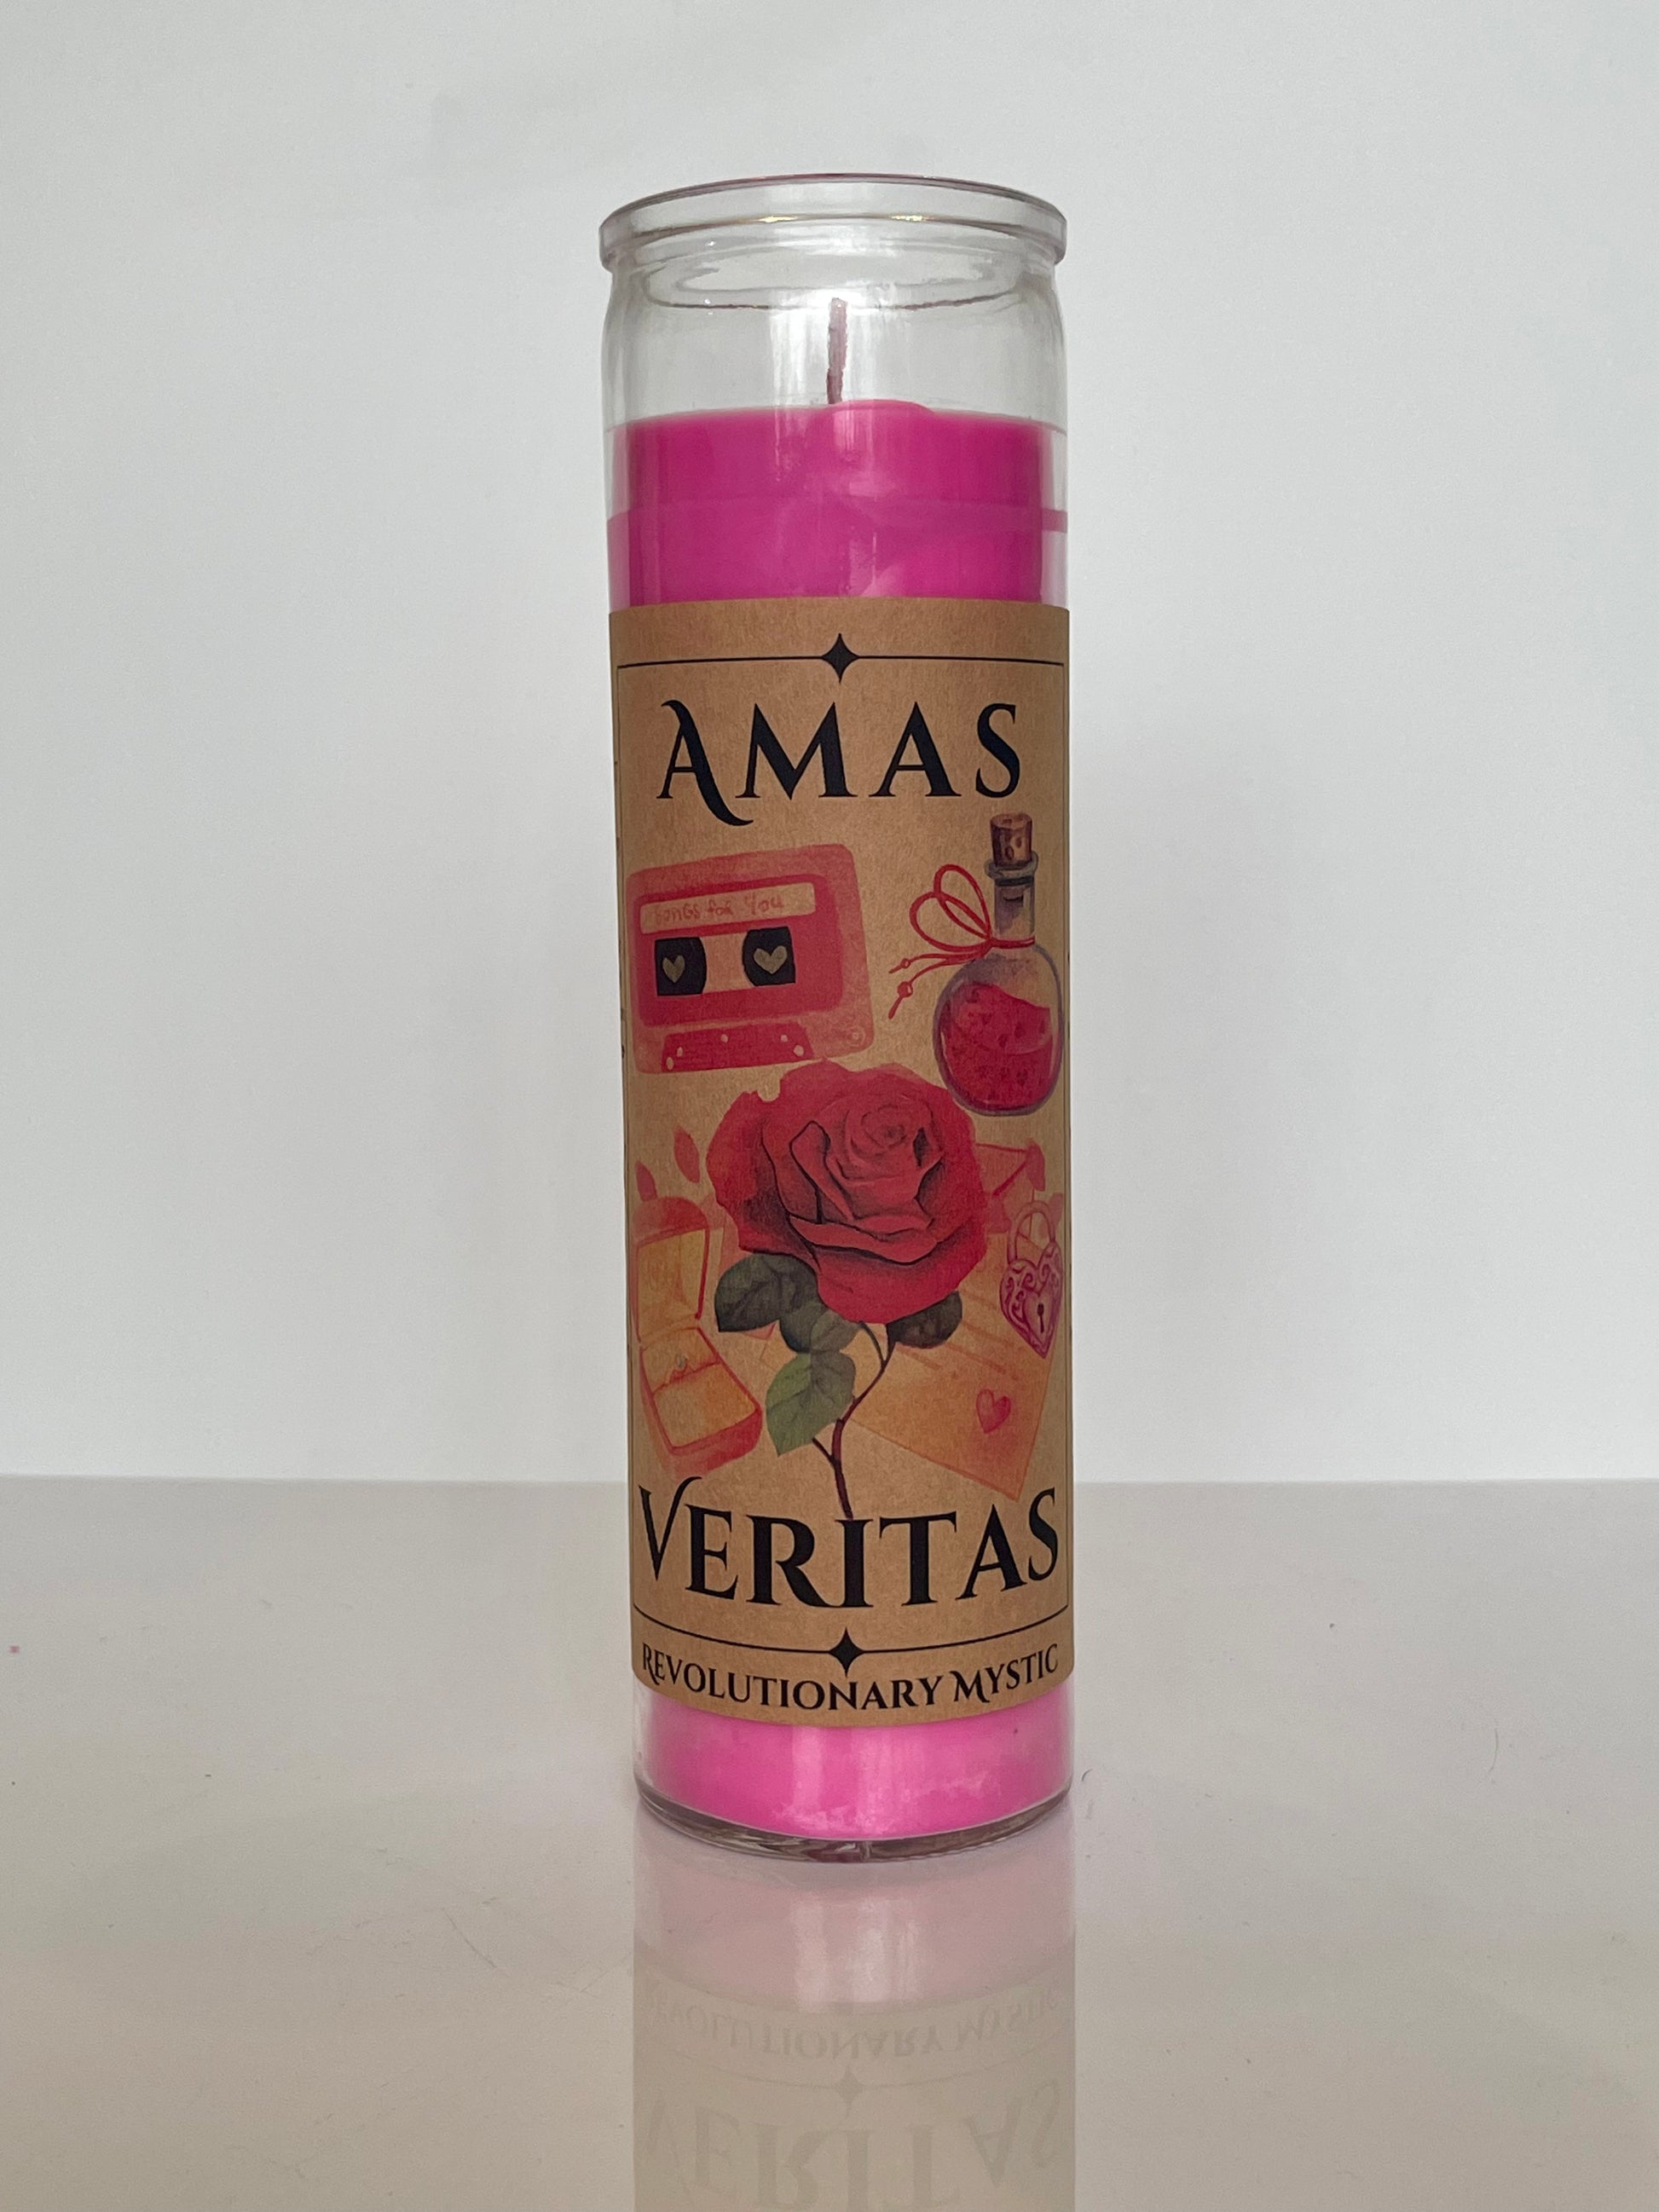 Amas Veritas "True Love" Candle - Revolutionary Mystic